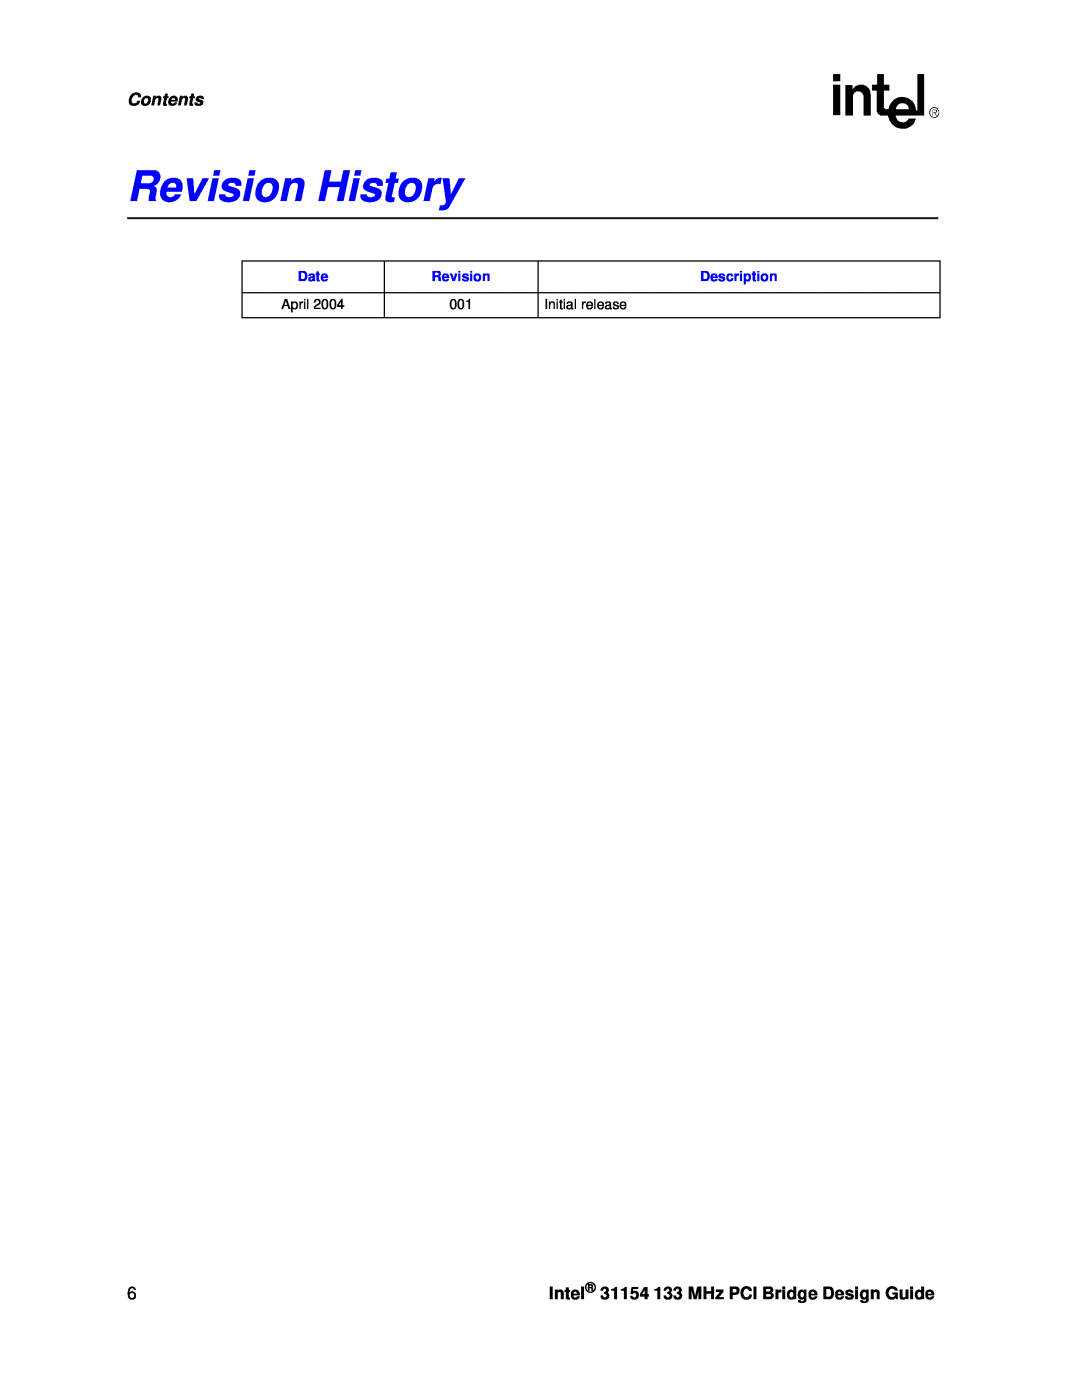 Intel manual Revision History, Contents, Intel 31154 133 MHz PCI Bridge Design Guide, Date, Description, Initial release 